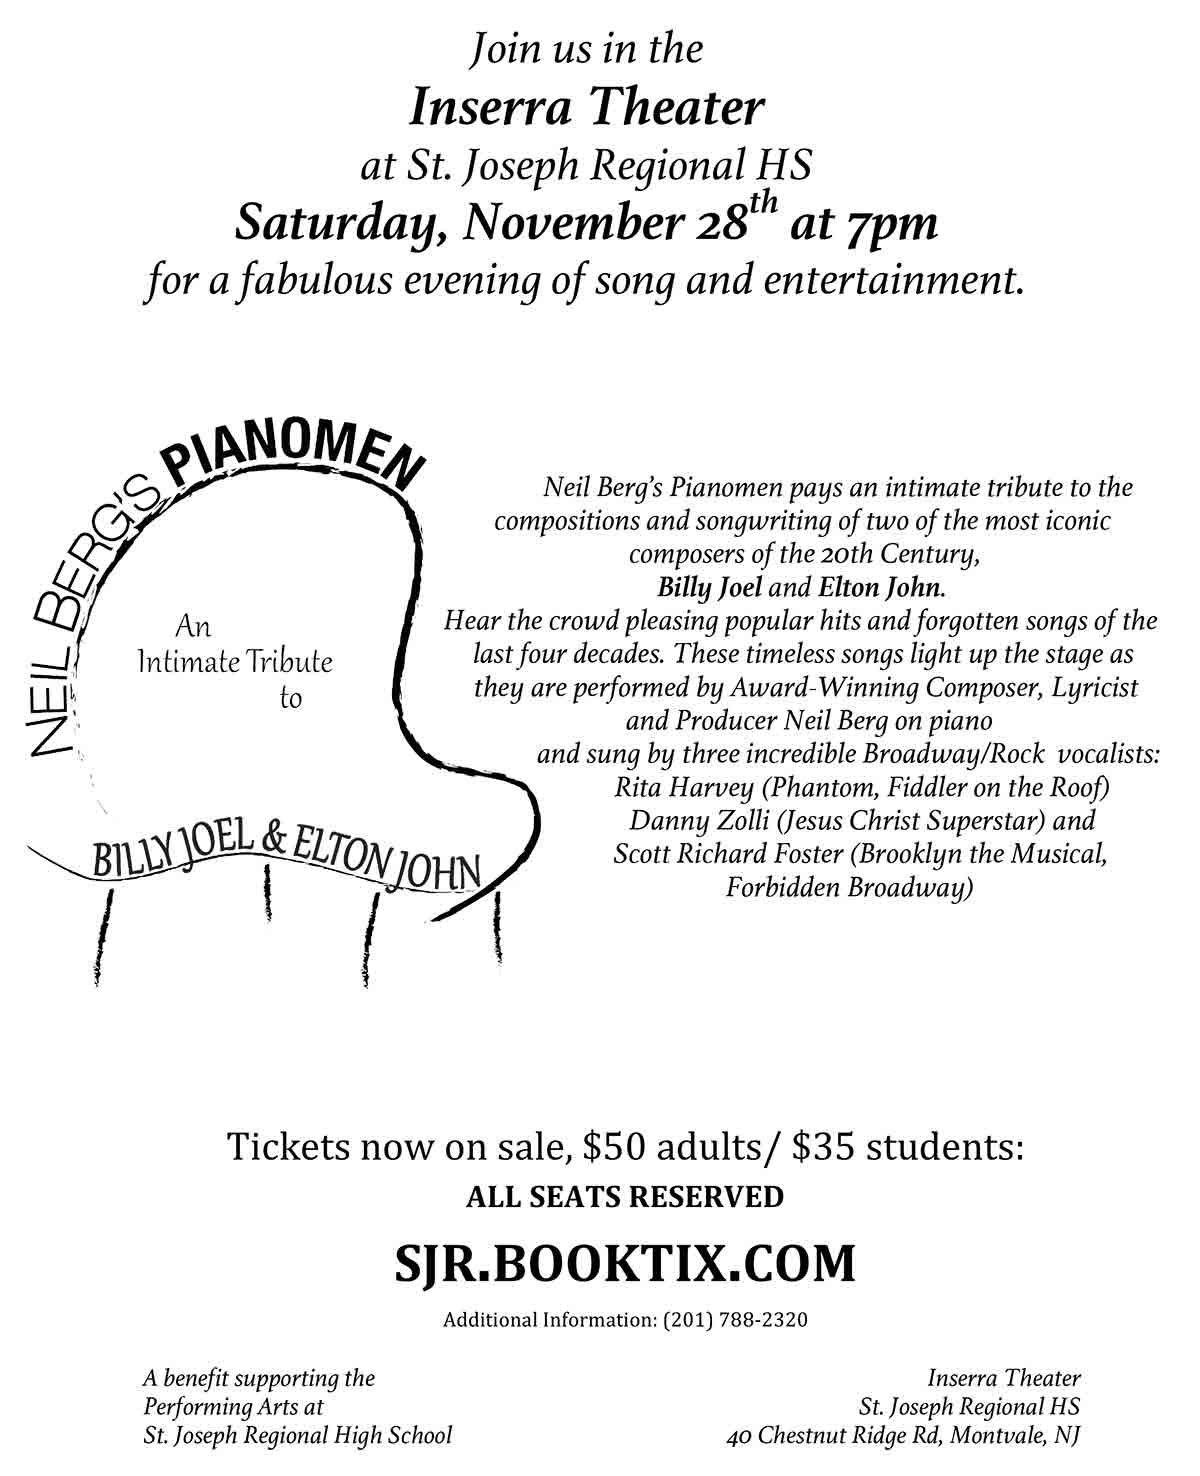 Neil Berg's Pianomen at the Inserra Theater - Saturday, November 28th